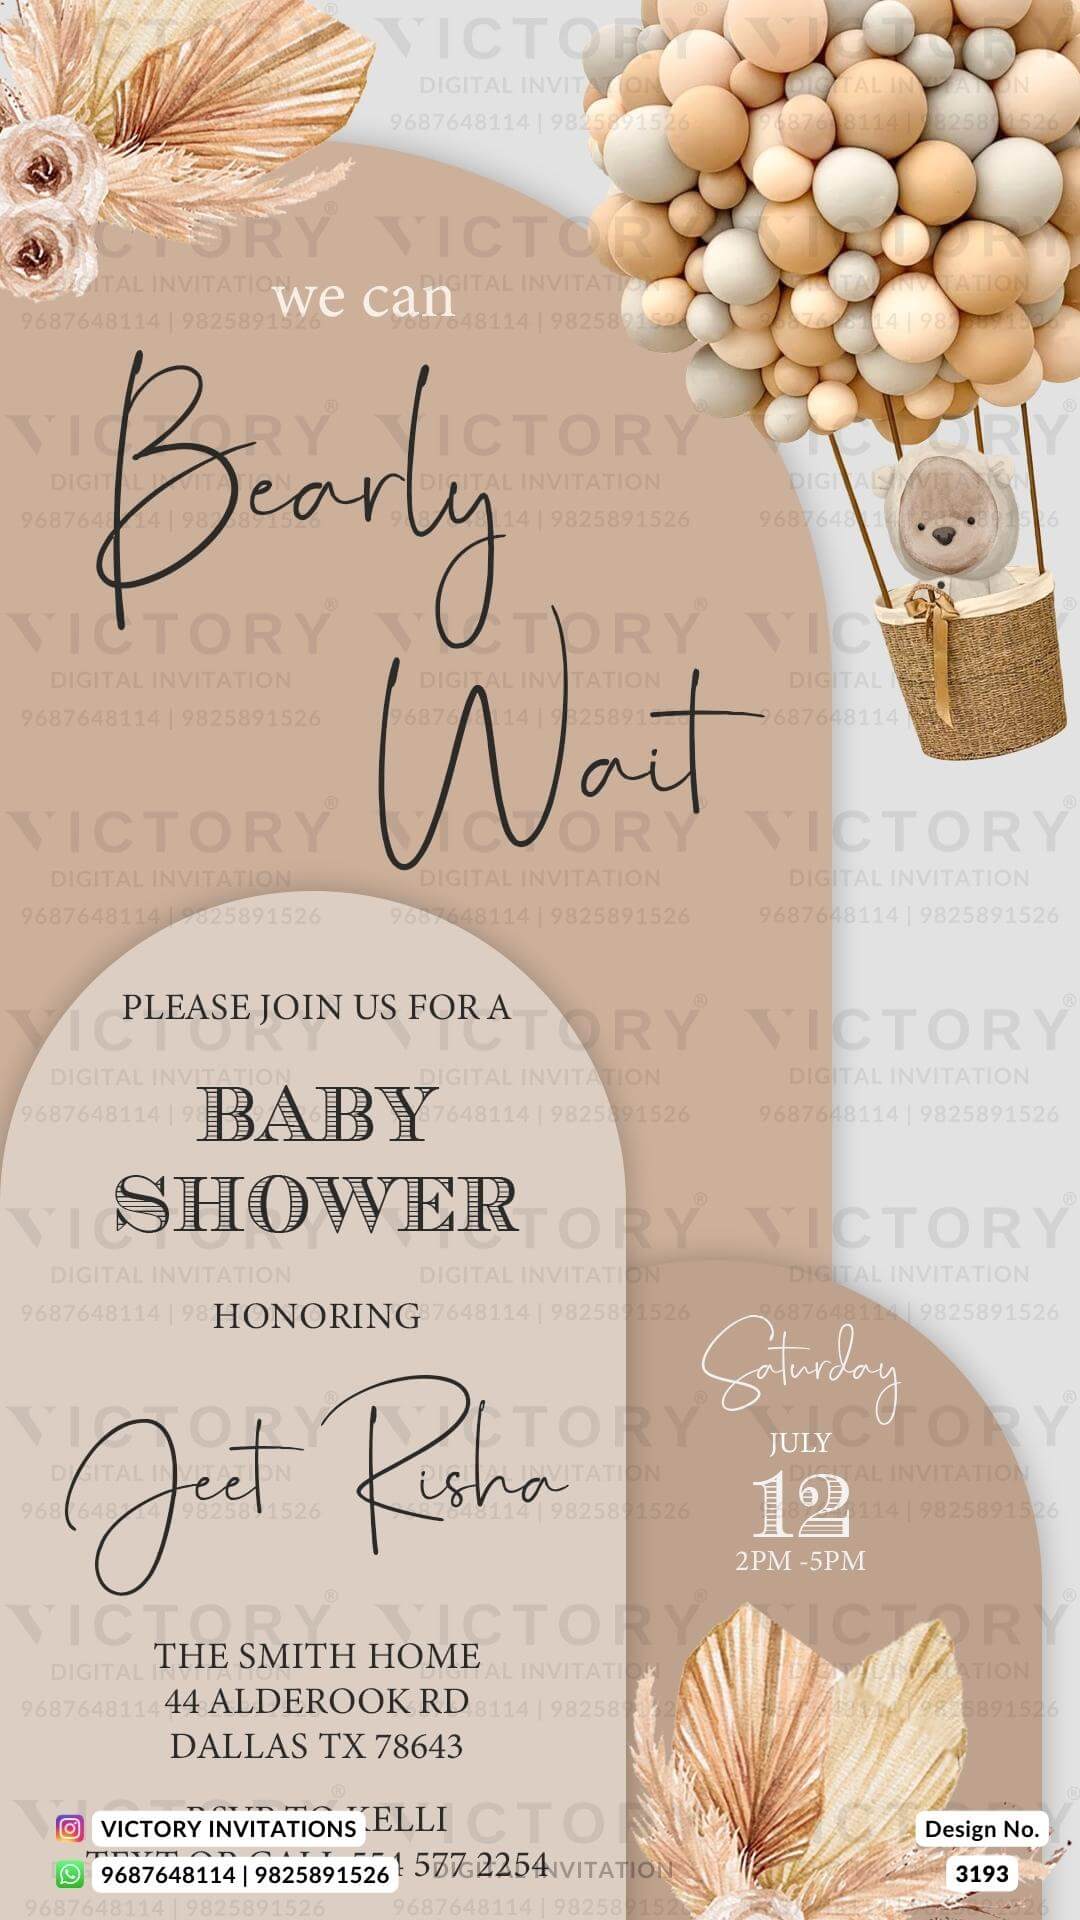 Baby Shower digital invitation card in english design no.3193